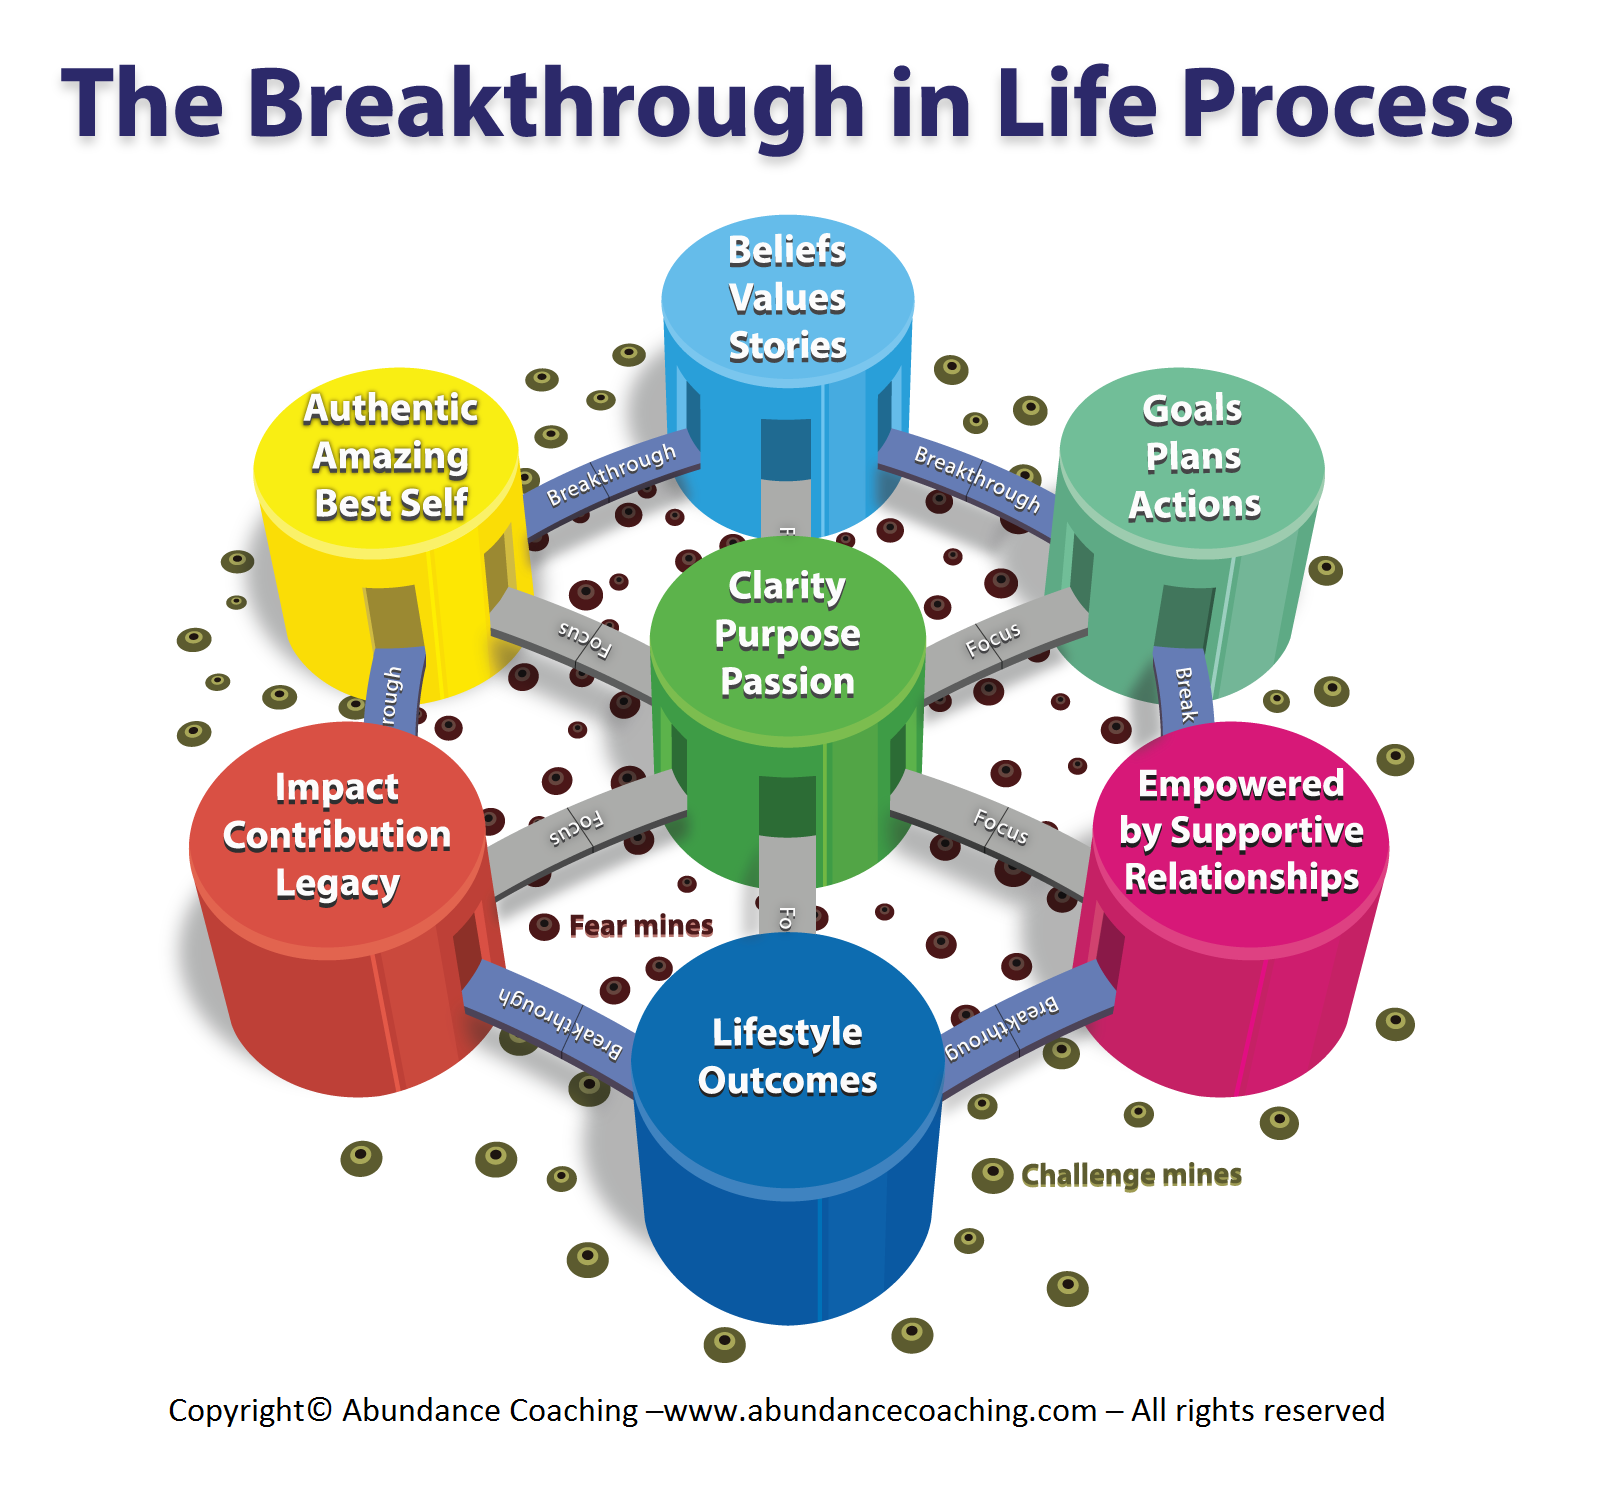 Copyright - Abundance Coaching - The Breakthrough in Life Process - Full version